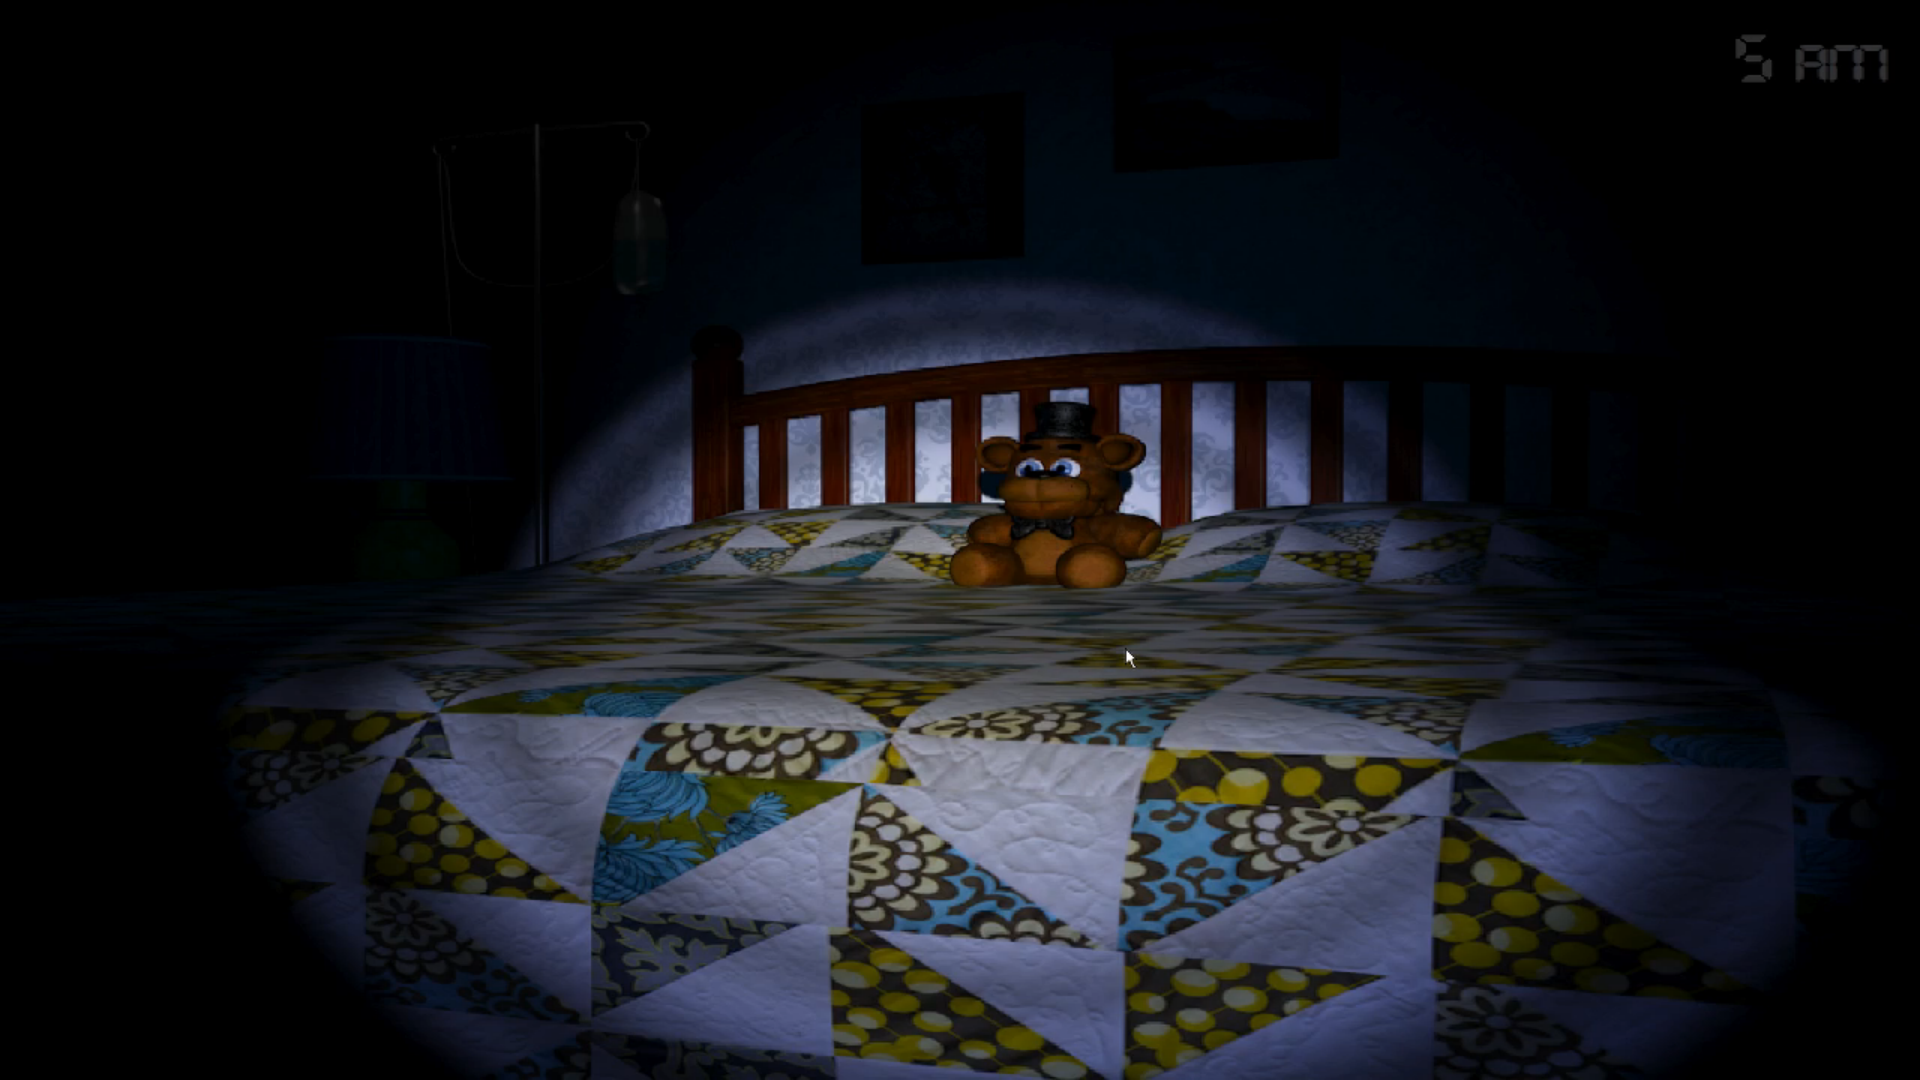 Five Nights at Freddy's 4 HD - Metacritic